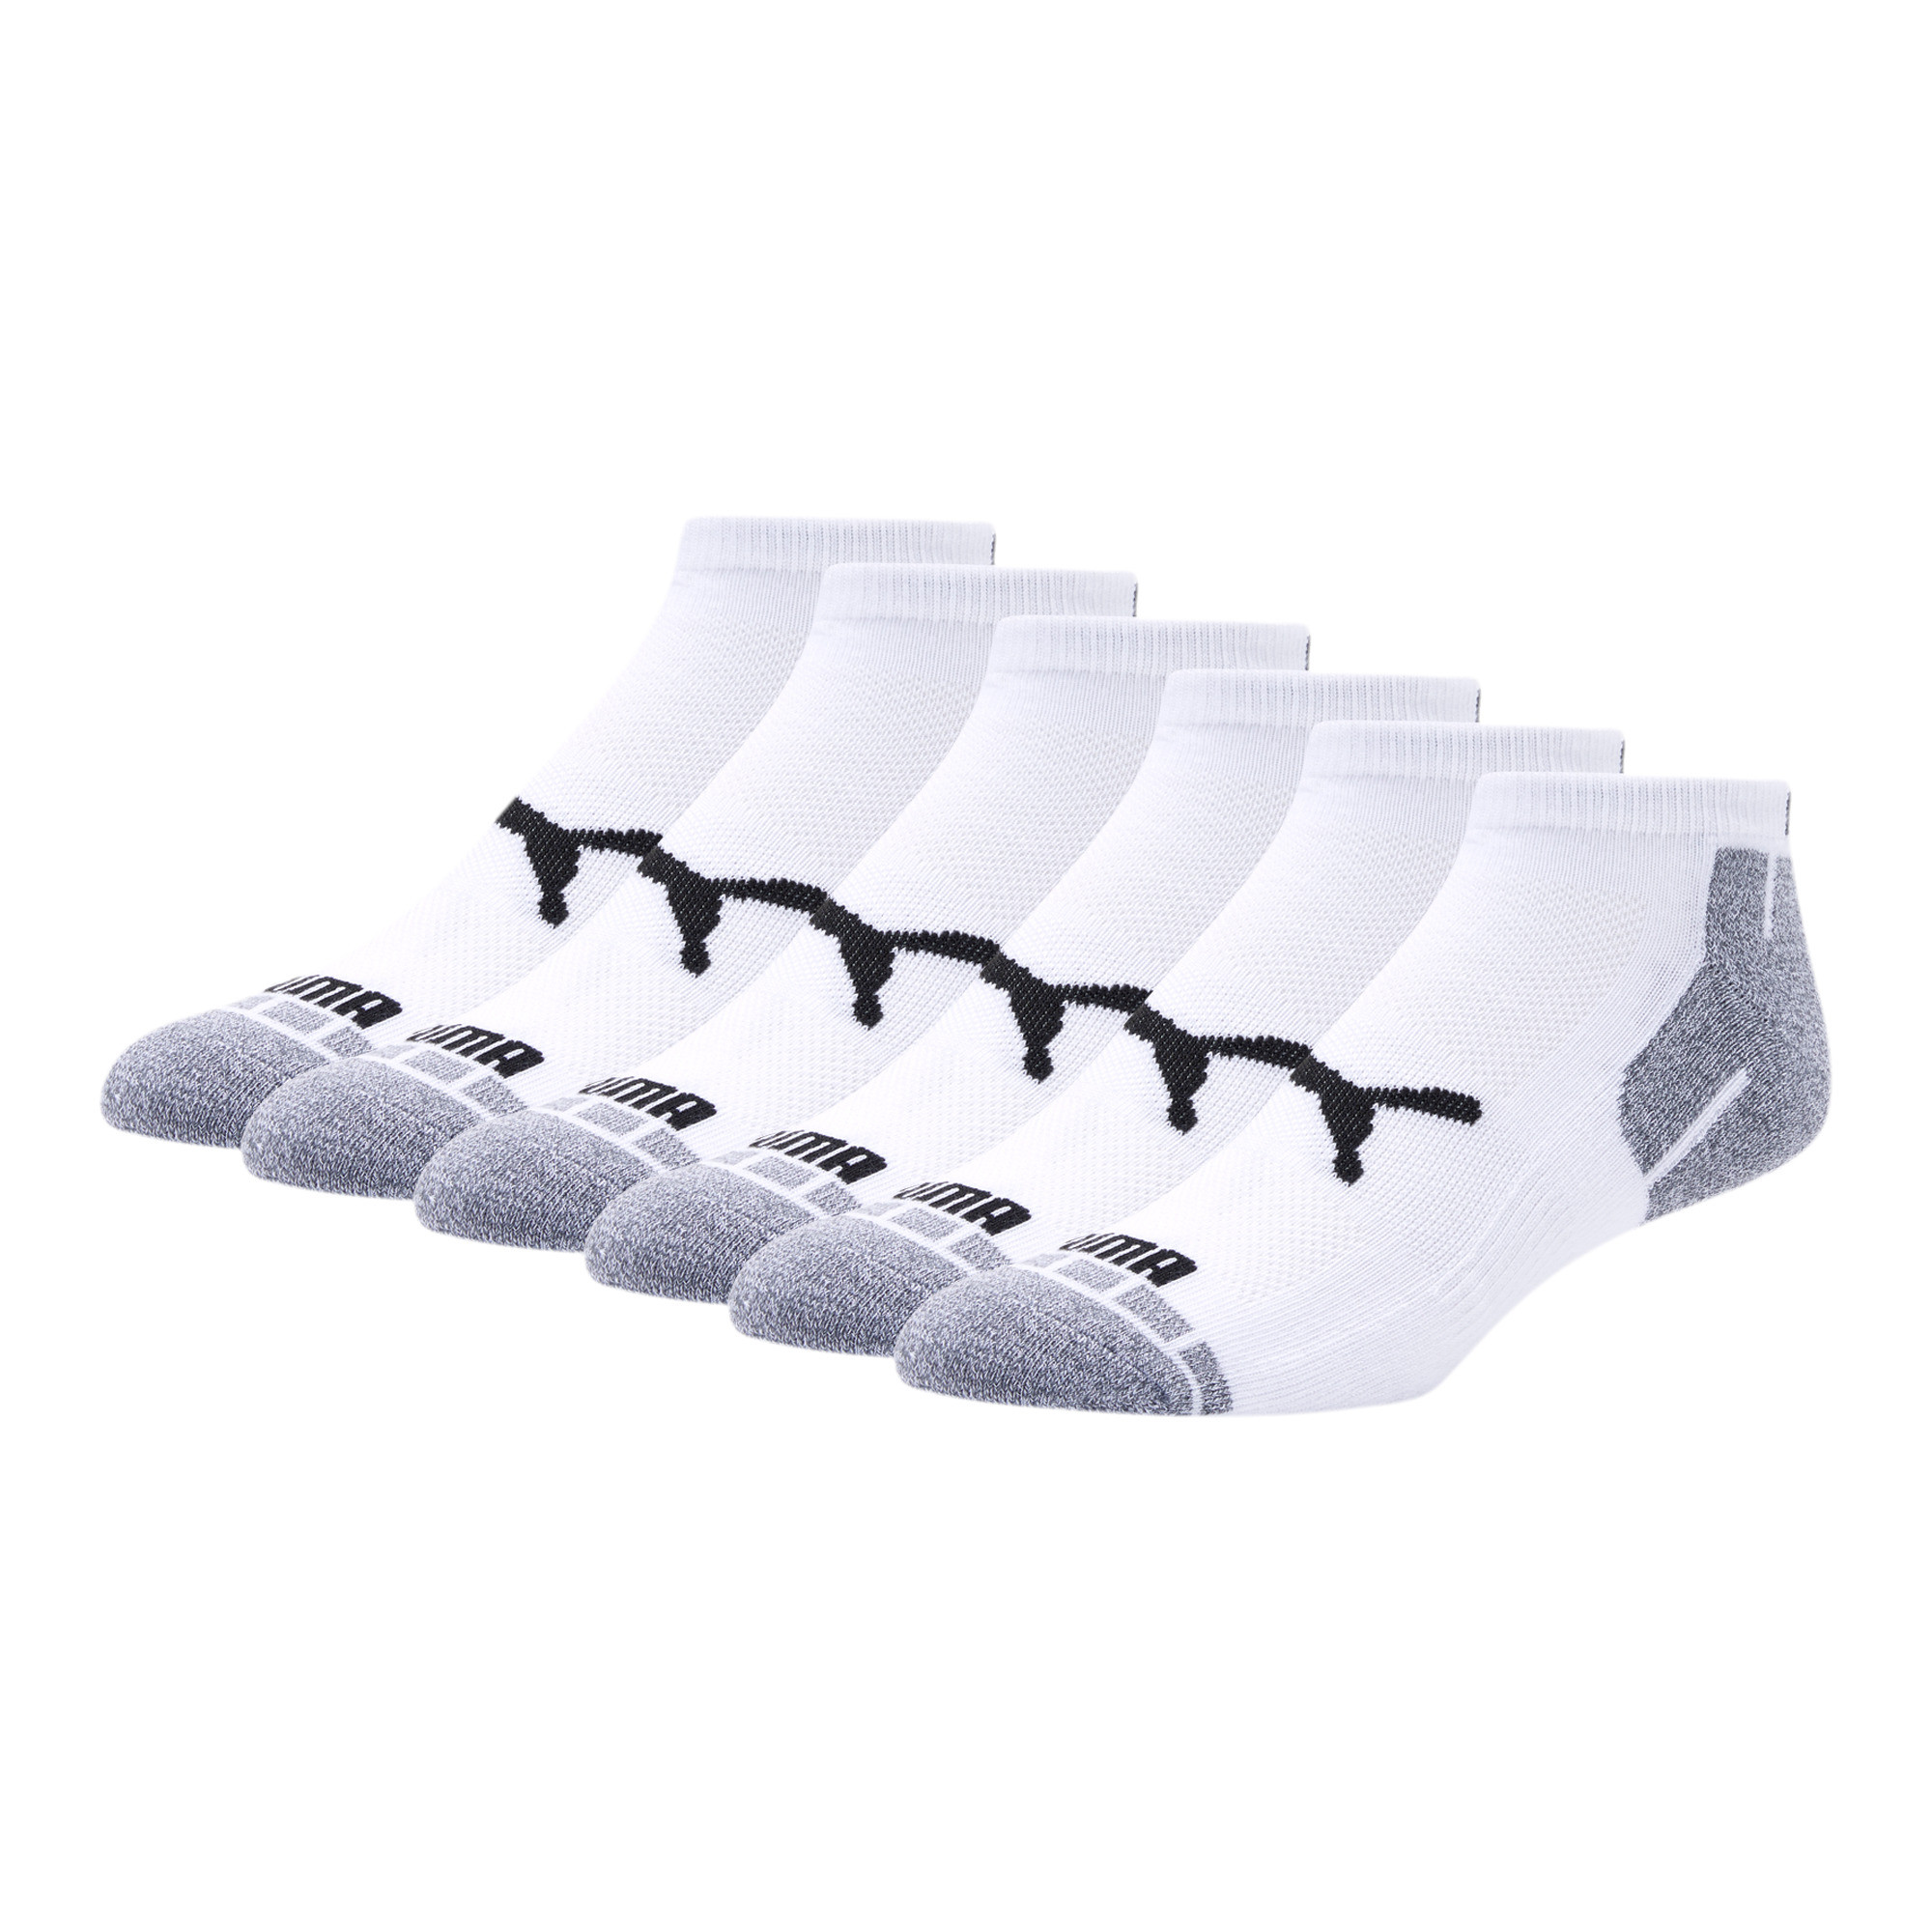 PUMA Men's Low Cut Socks [6 Pack] White Size 10-13